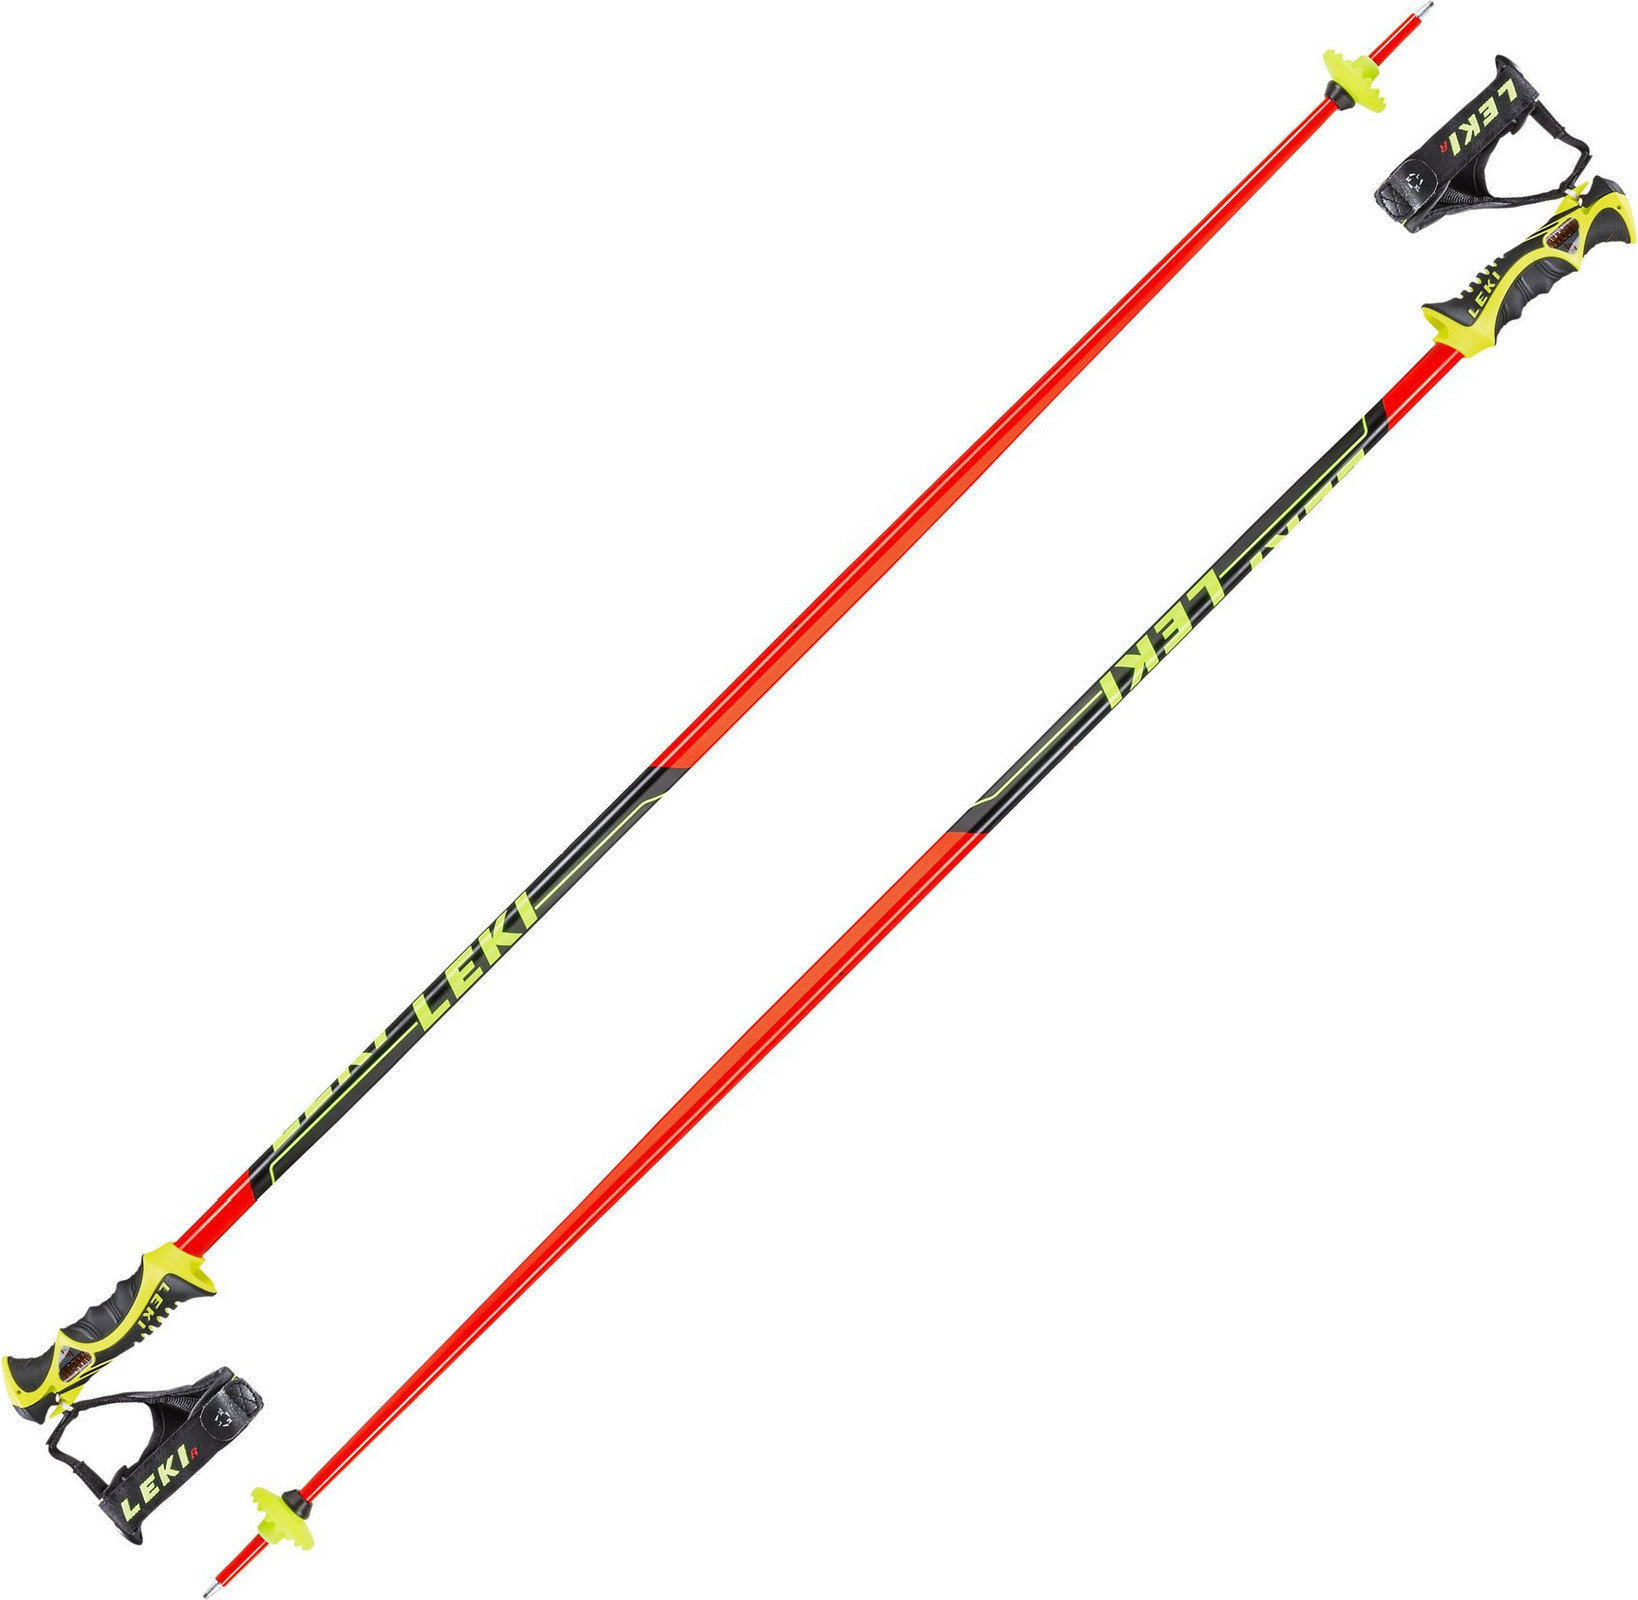 Ski Poles Leki Worldcup Racing SL Neonred/Black/White/Yellow 130 cm Ski Poles